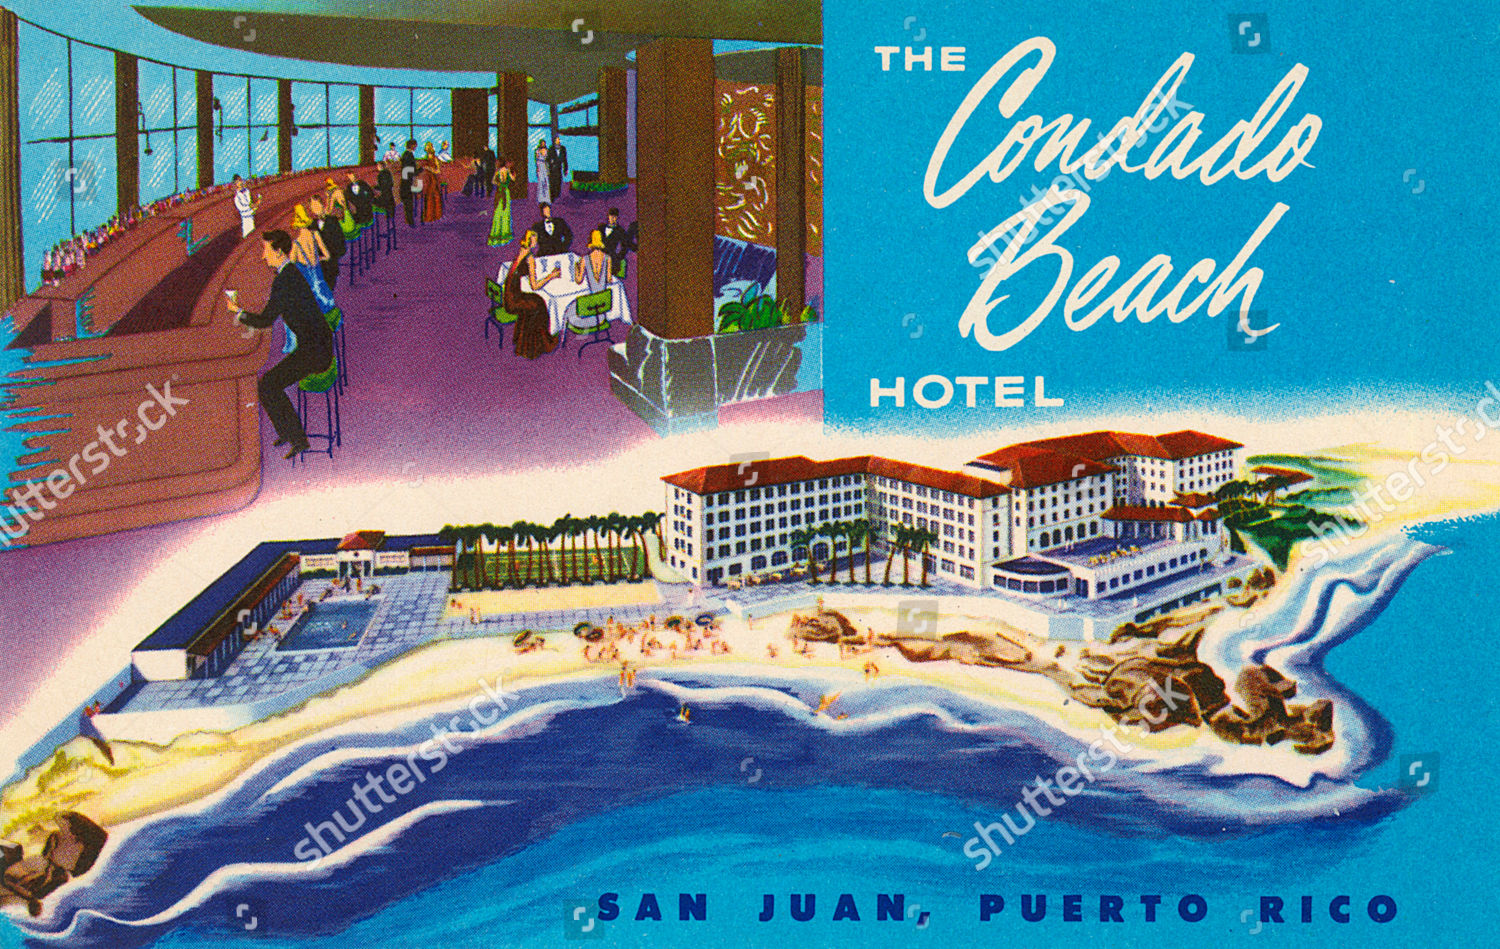 Condado Beach Hotel San Juan Puerto Rico Foto Editorial En Stock Imagen En Stock Shutterstock